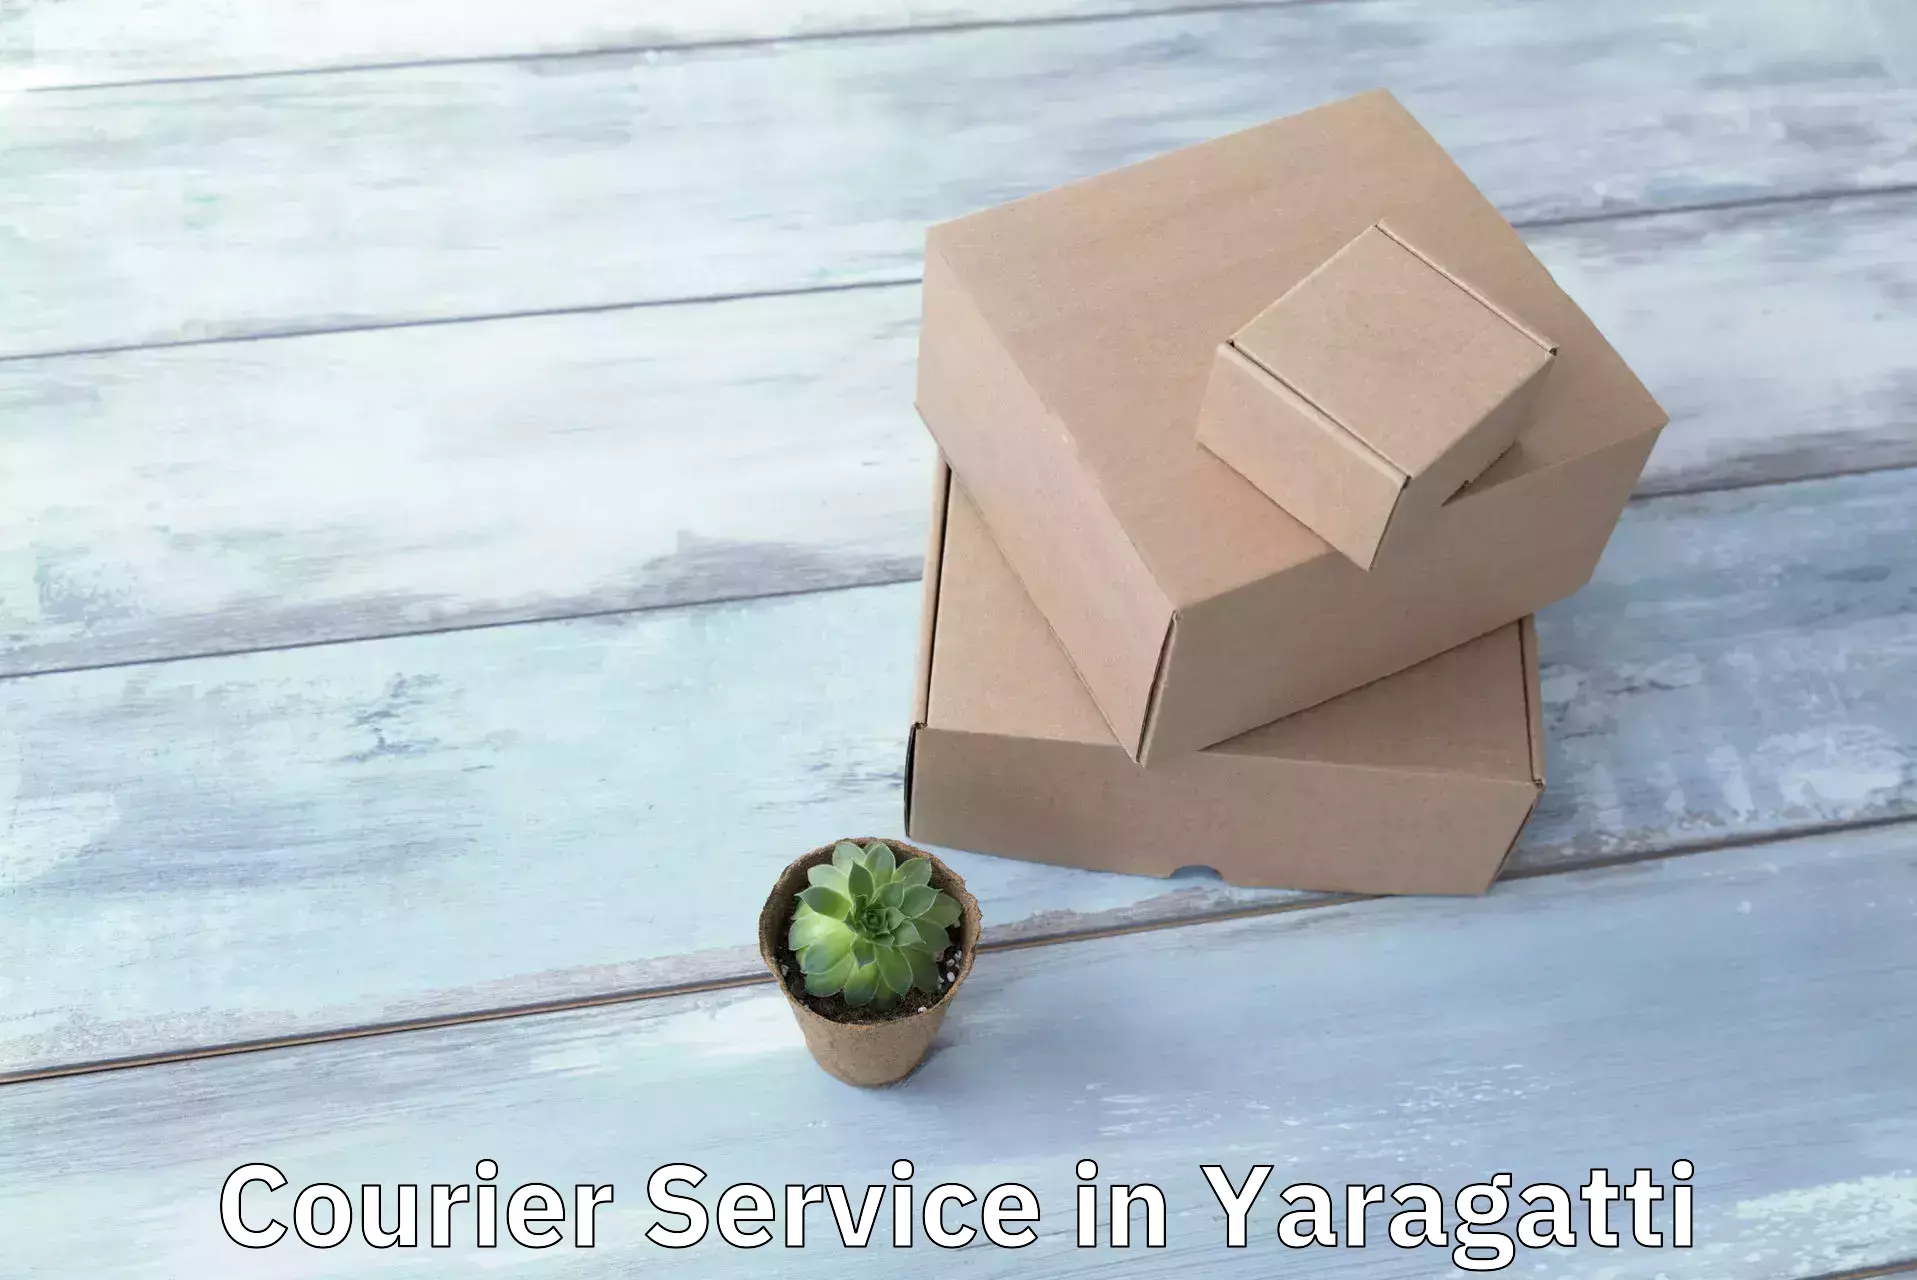 Affordable logistics services in Yaragatti